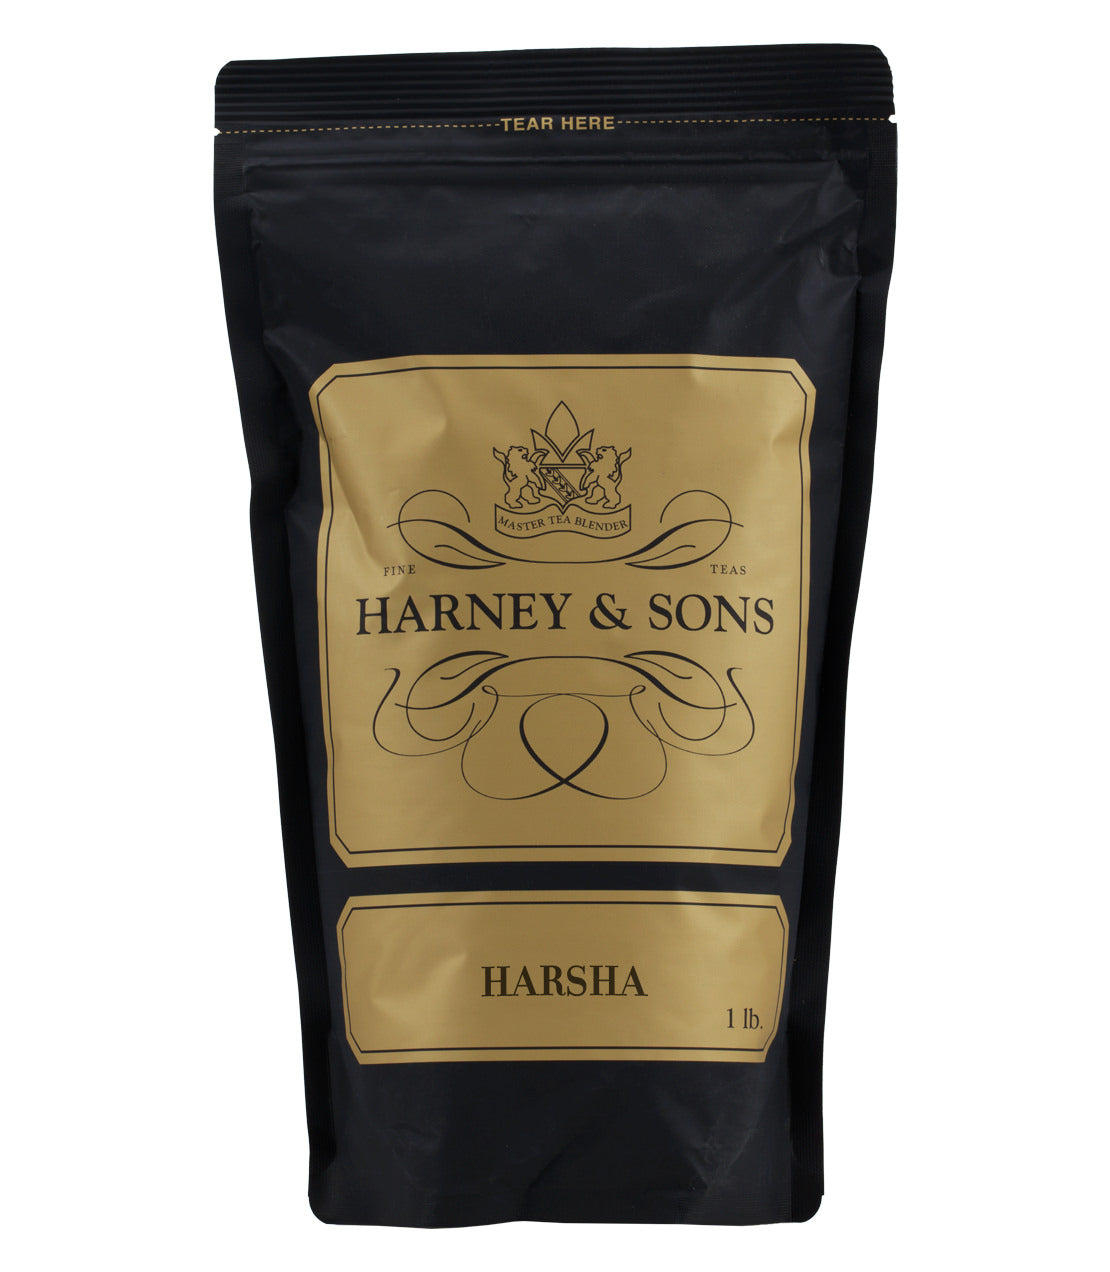 HarSha - Loose 1 lb. Bag - Harney & Sons Fine Teas